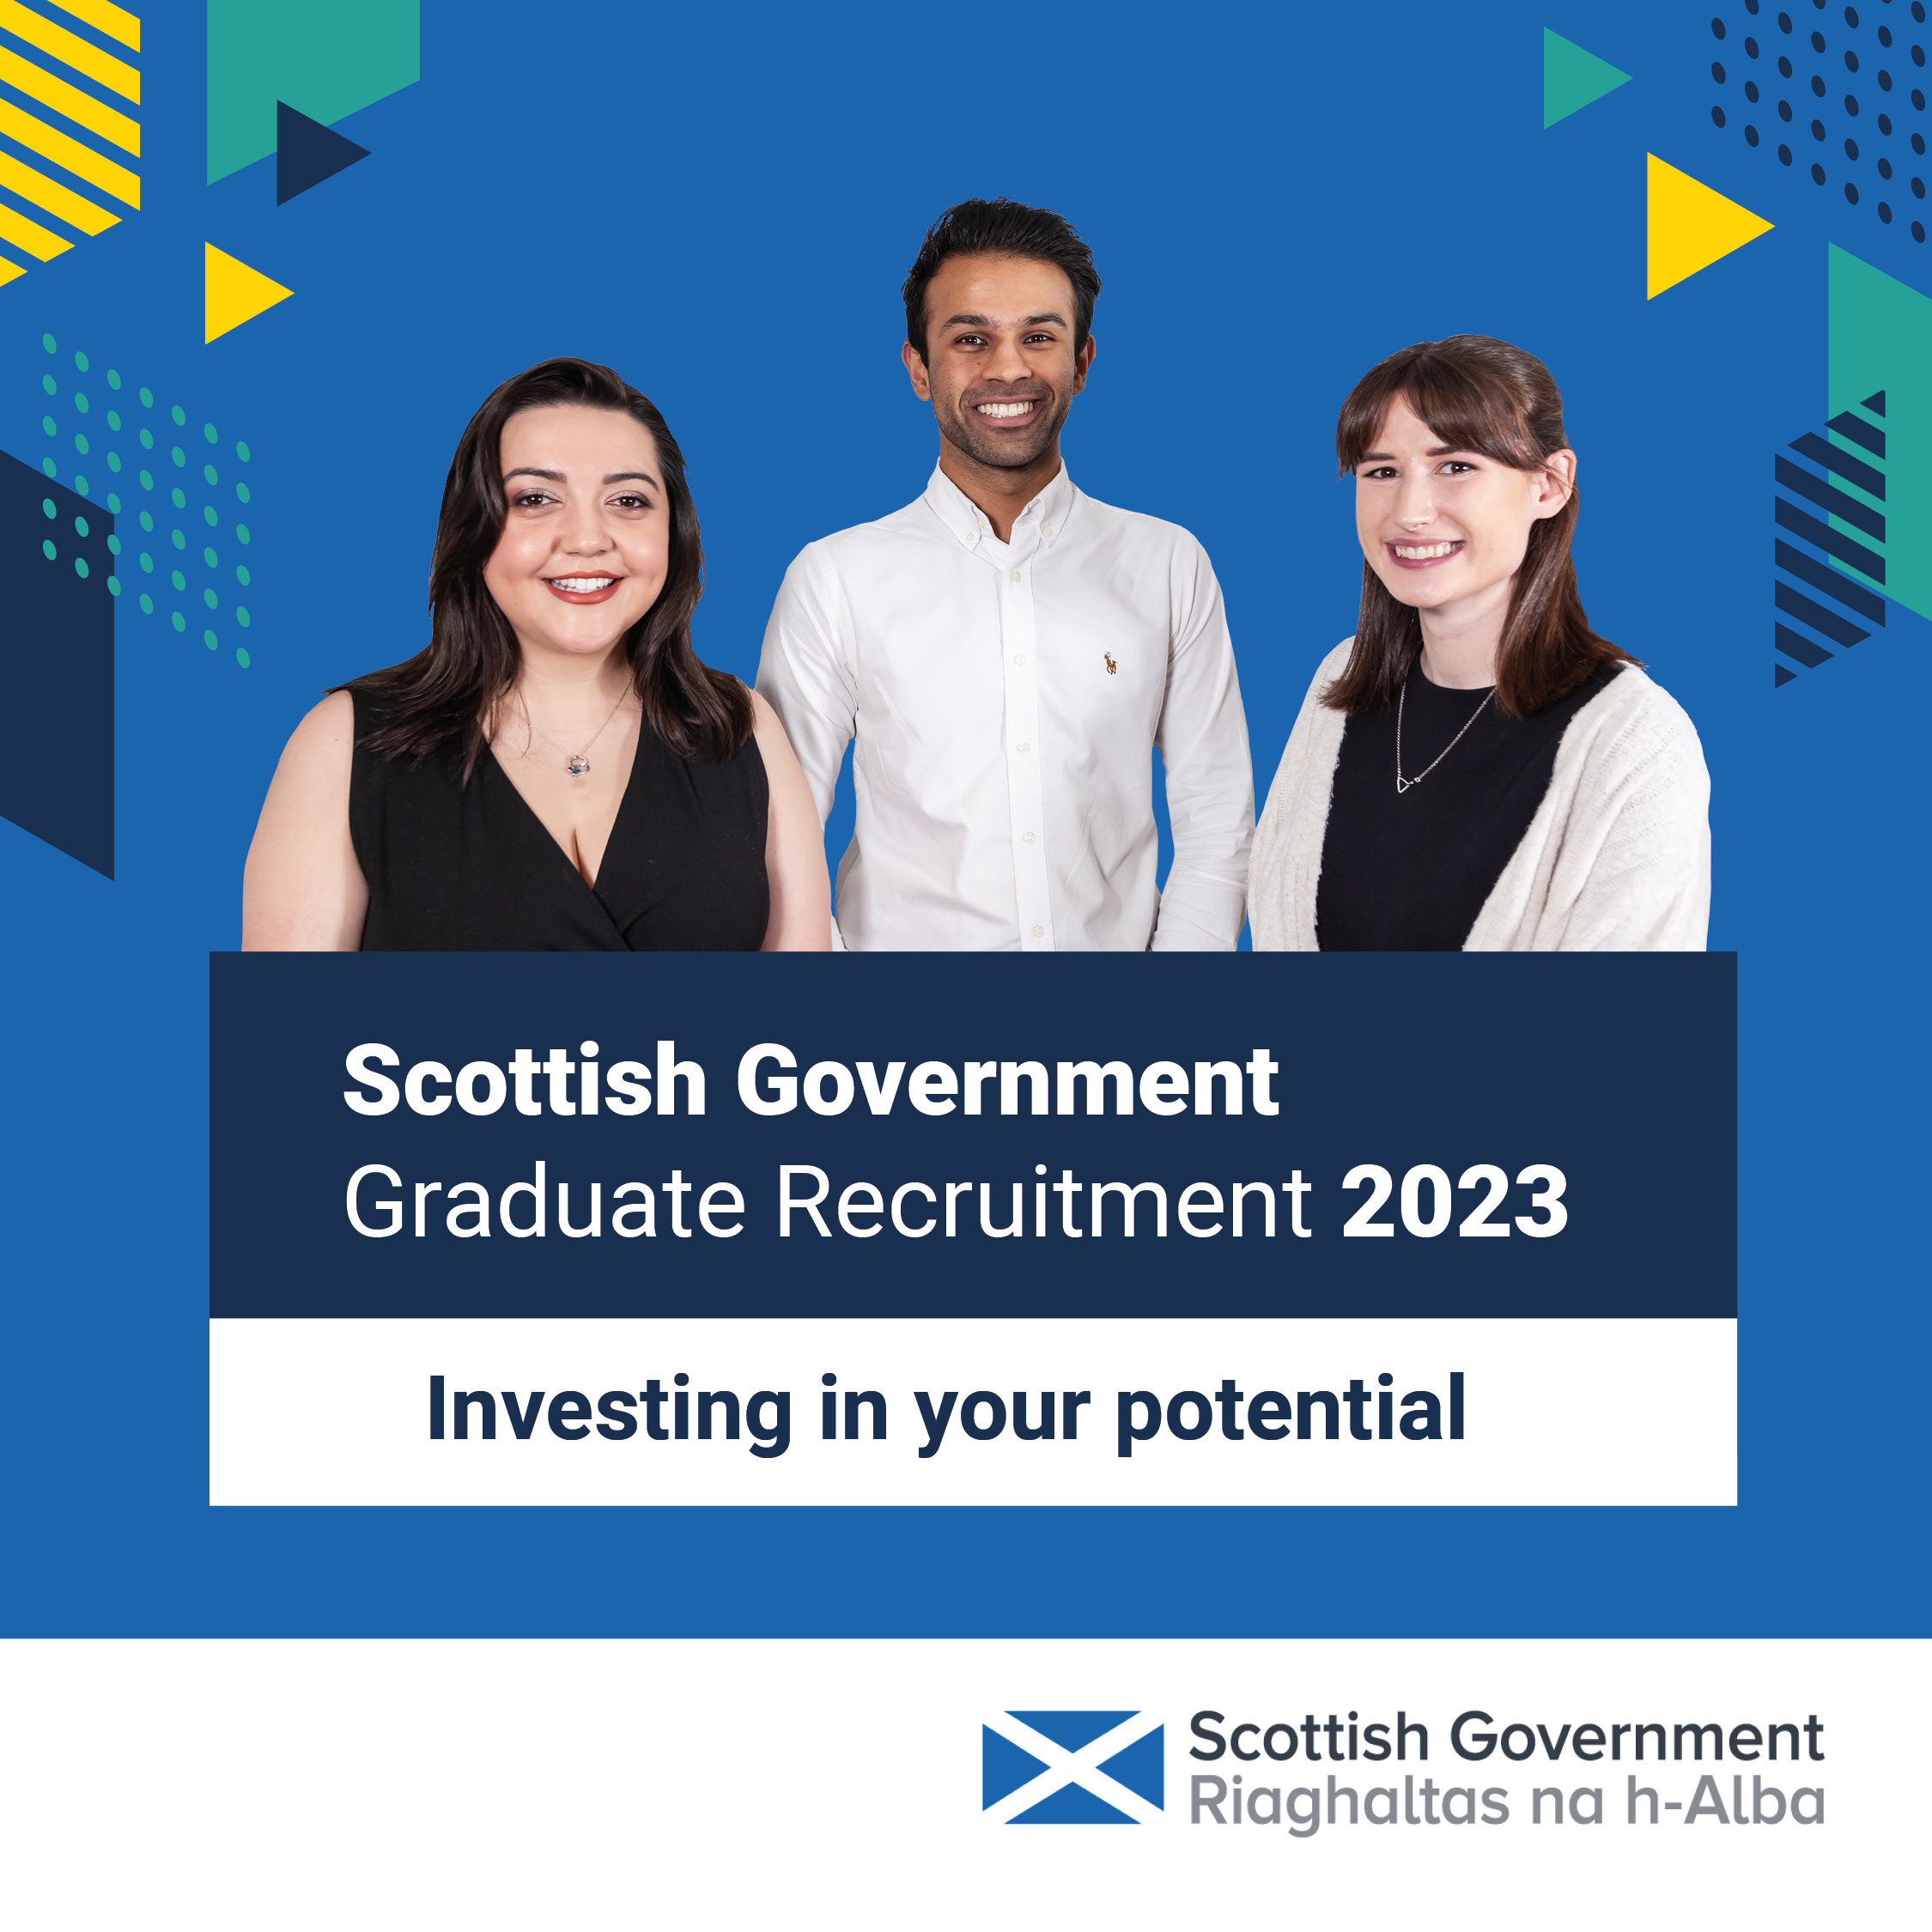 Scottish Government Graduate Recruitment 2023 - Investing in your potential.